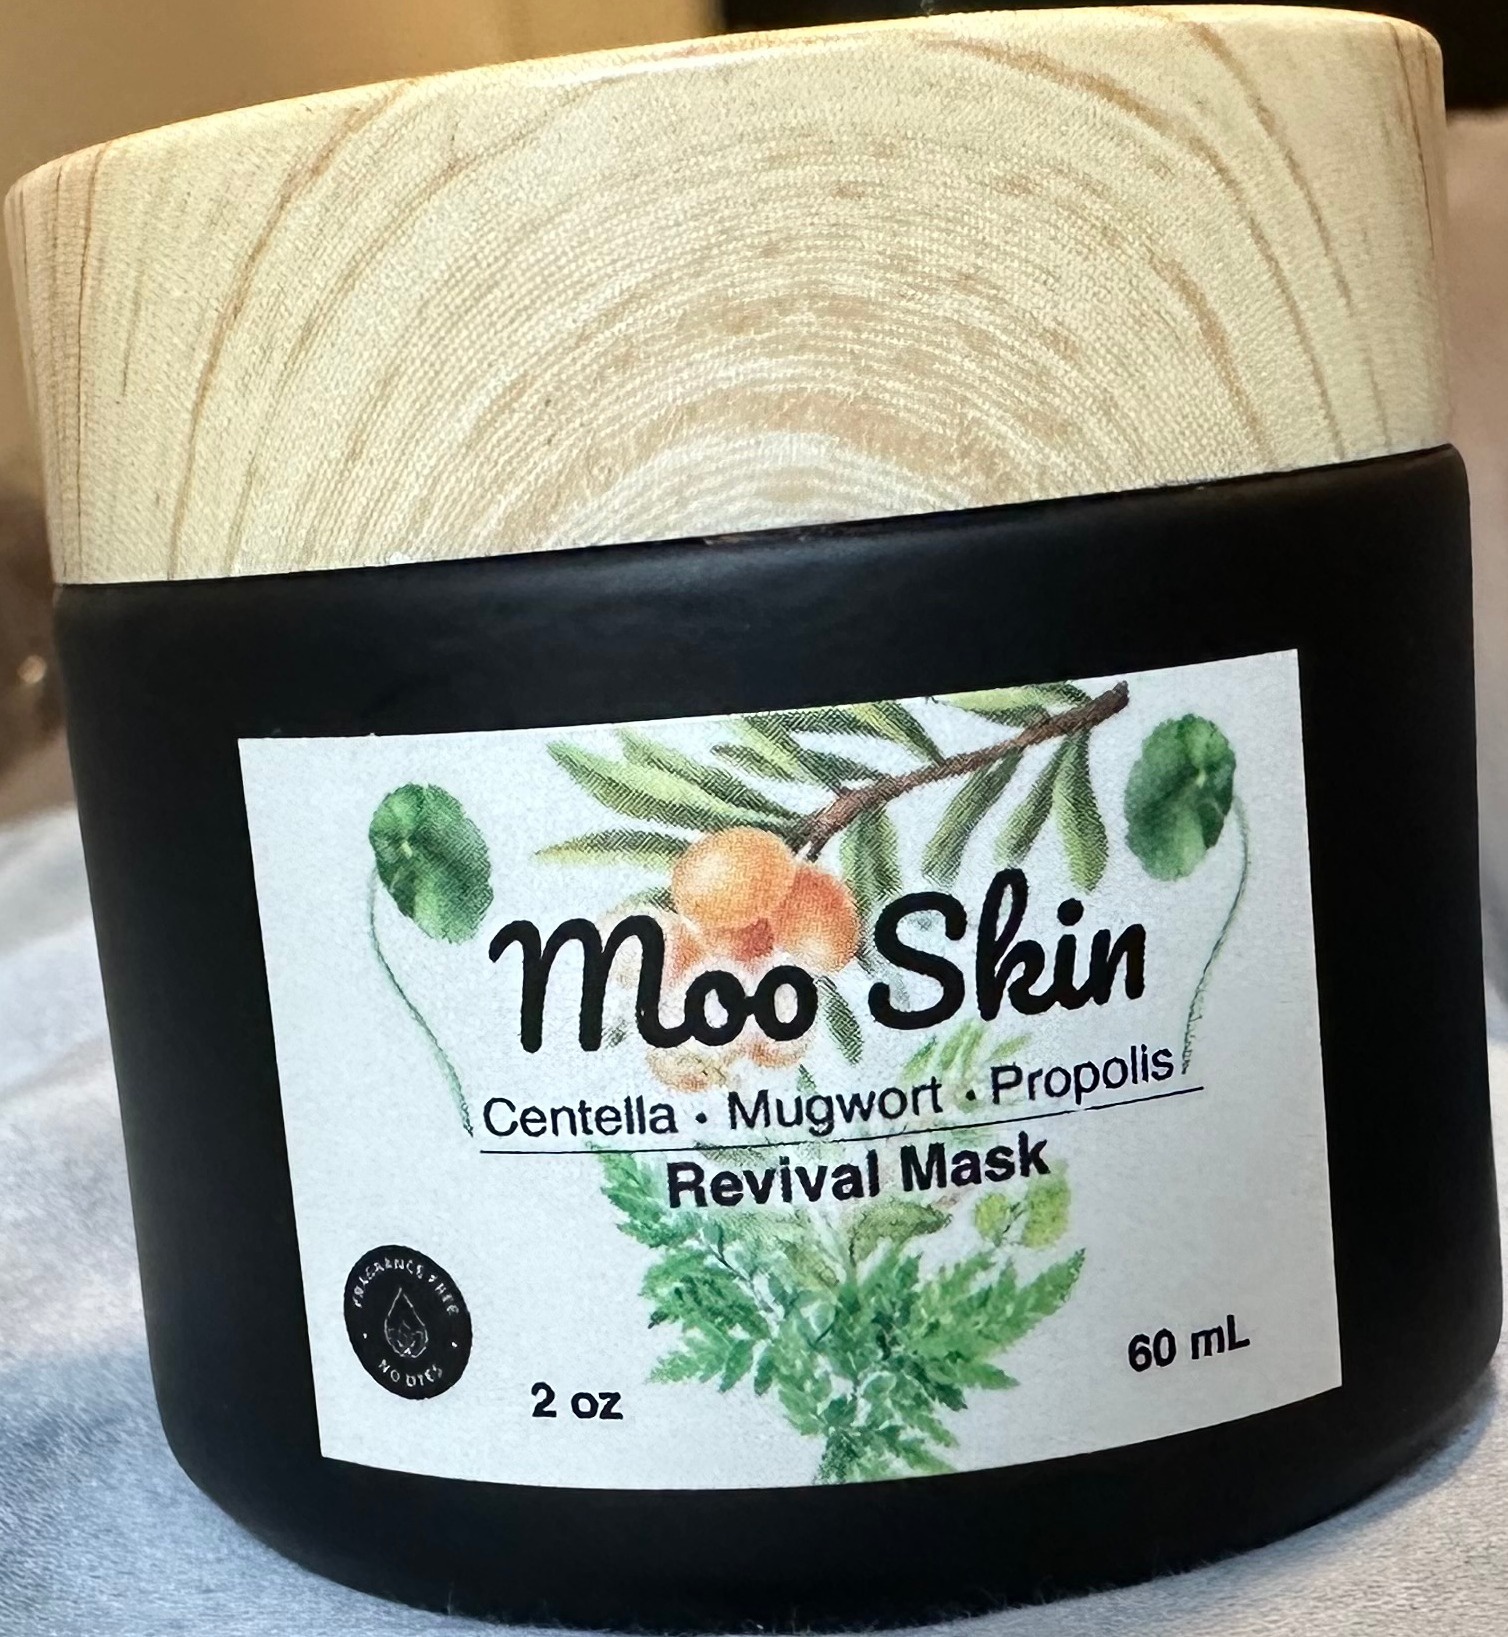 Moo Skin Revival Mask